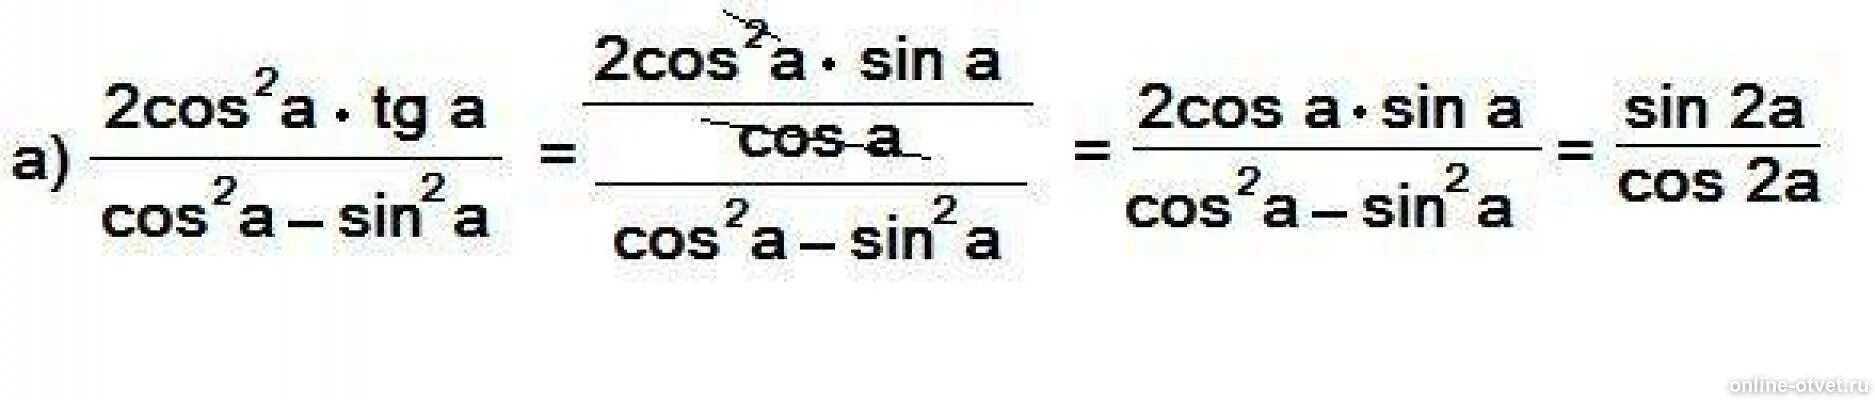 Cos a b cos a b упростить выражение. Упростить выражение sin b/cos b - sin b. Cos2a. 1-Cos2a формула. Найдите значение выражения cos 2 30